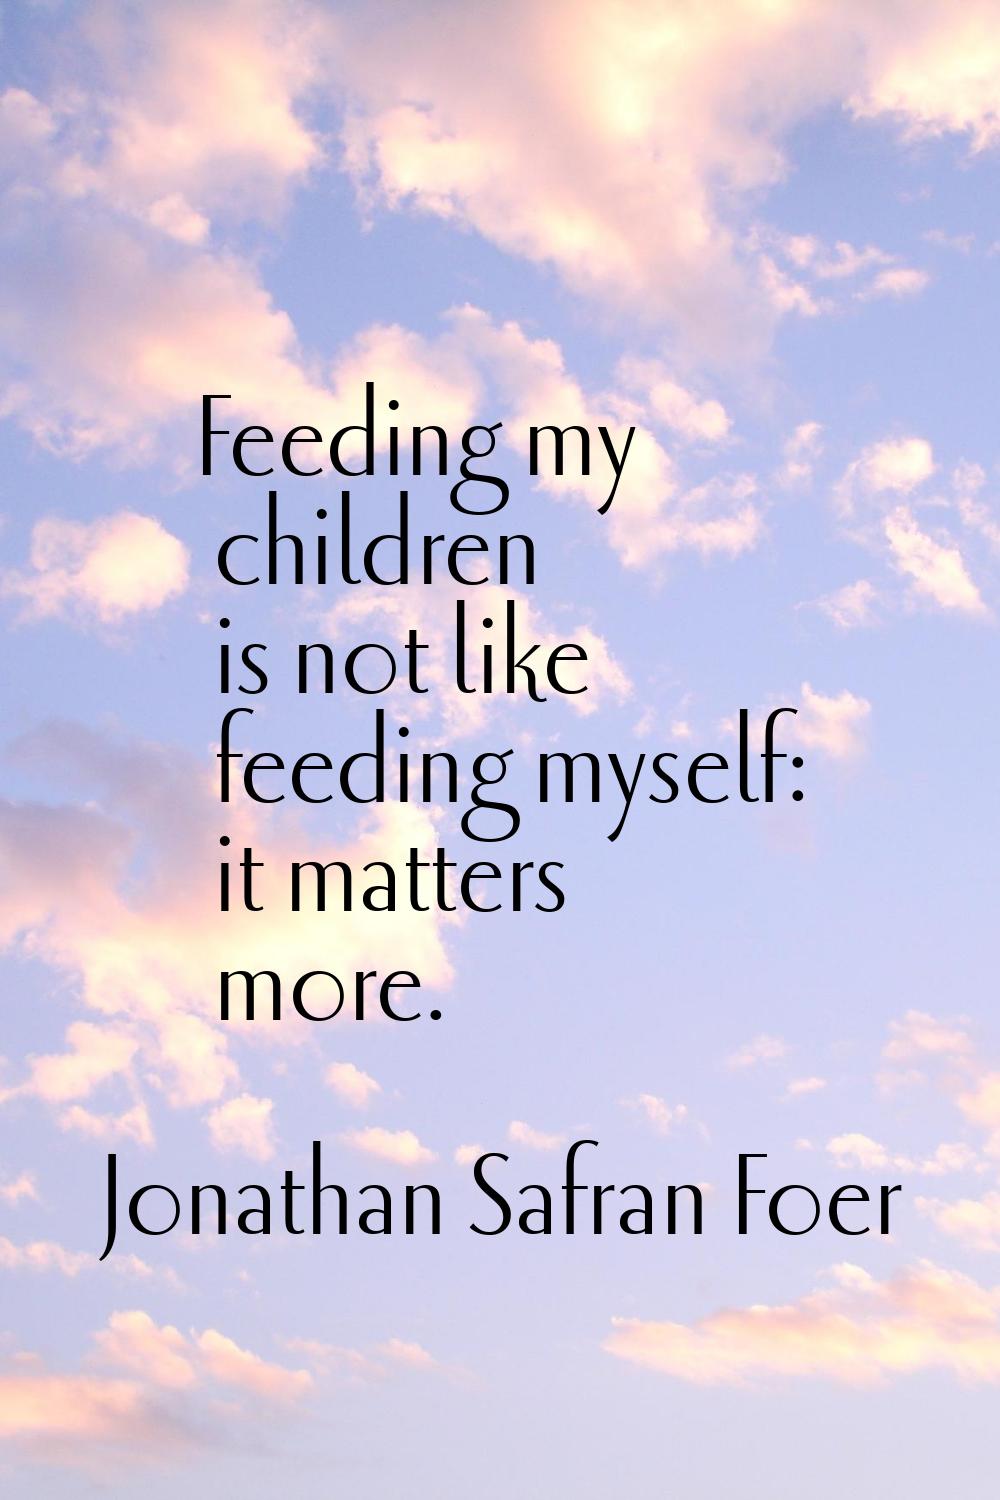 Feeding my children is not like feeding myself: it matters more.